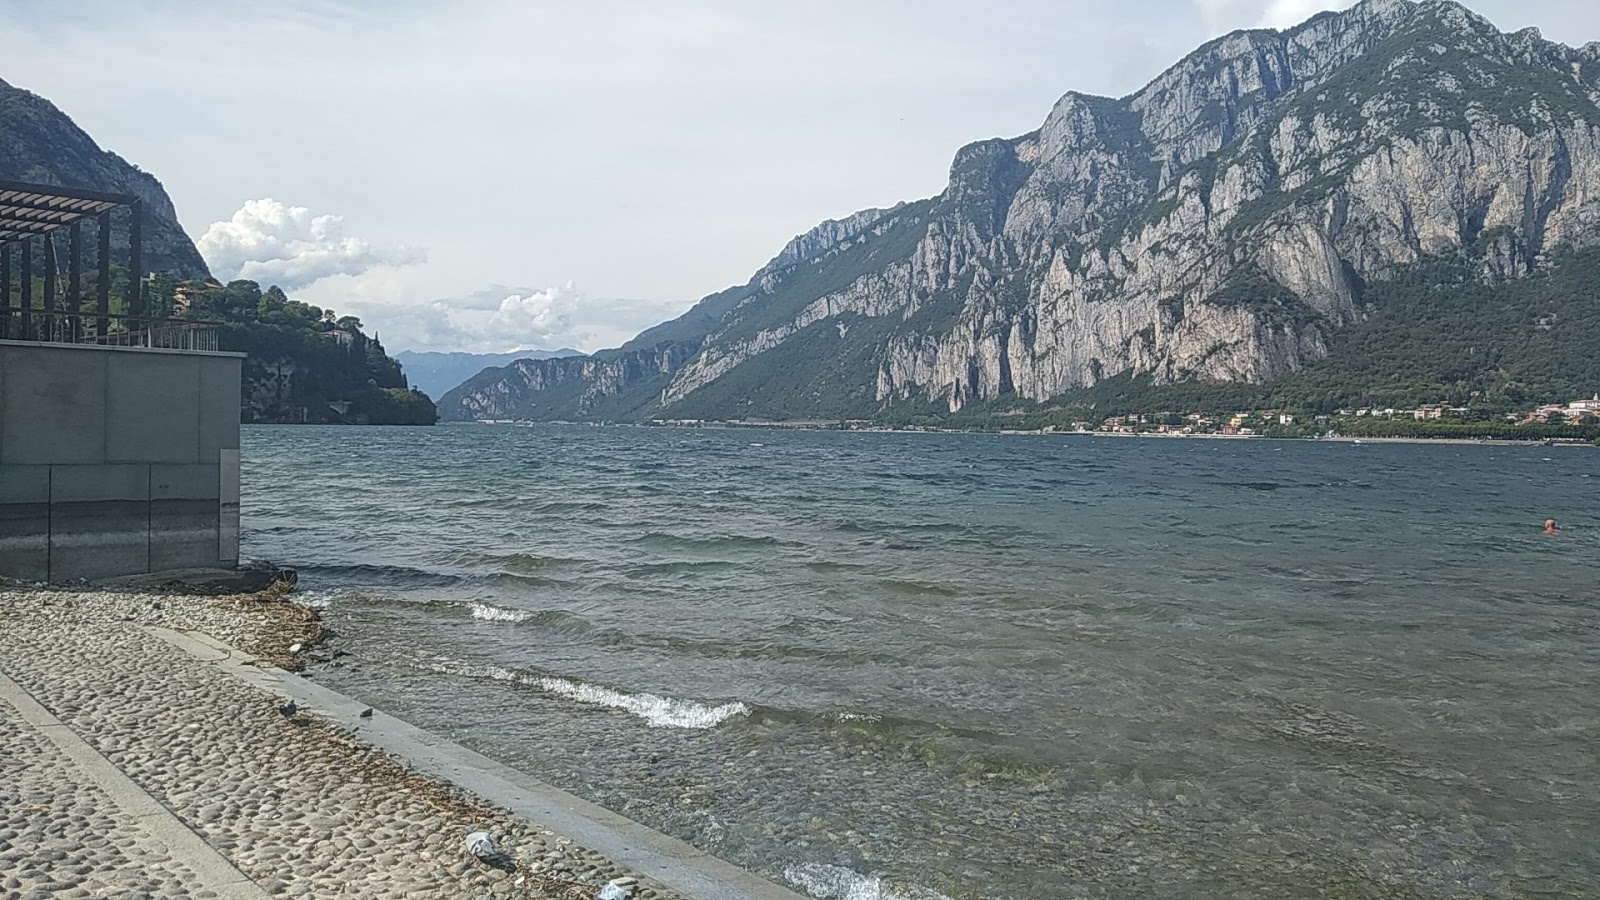 Spiaggia Malgrate的照片 带有岩石覆盖表面